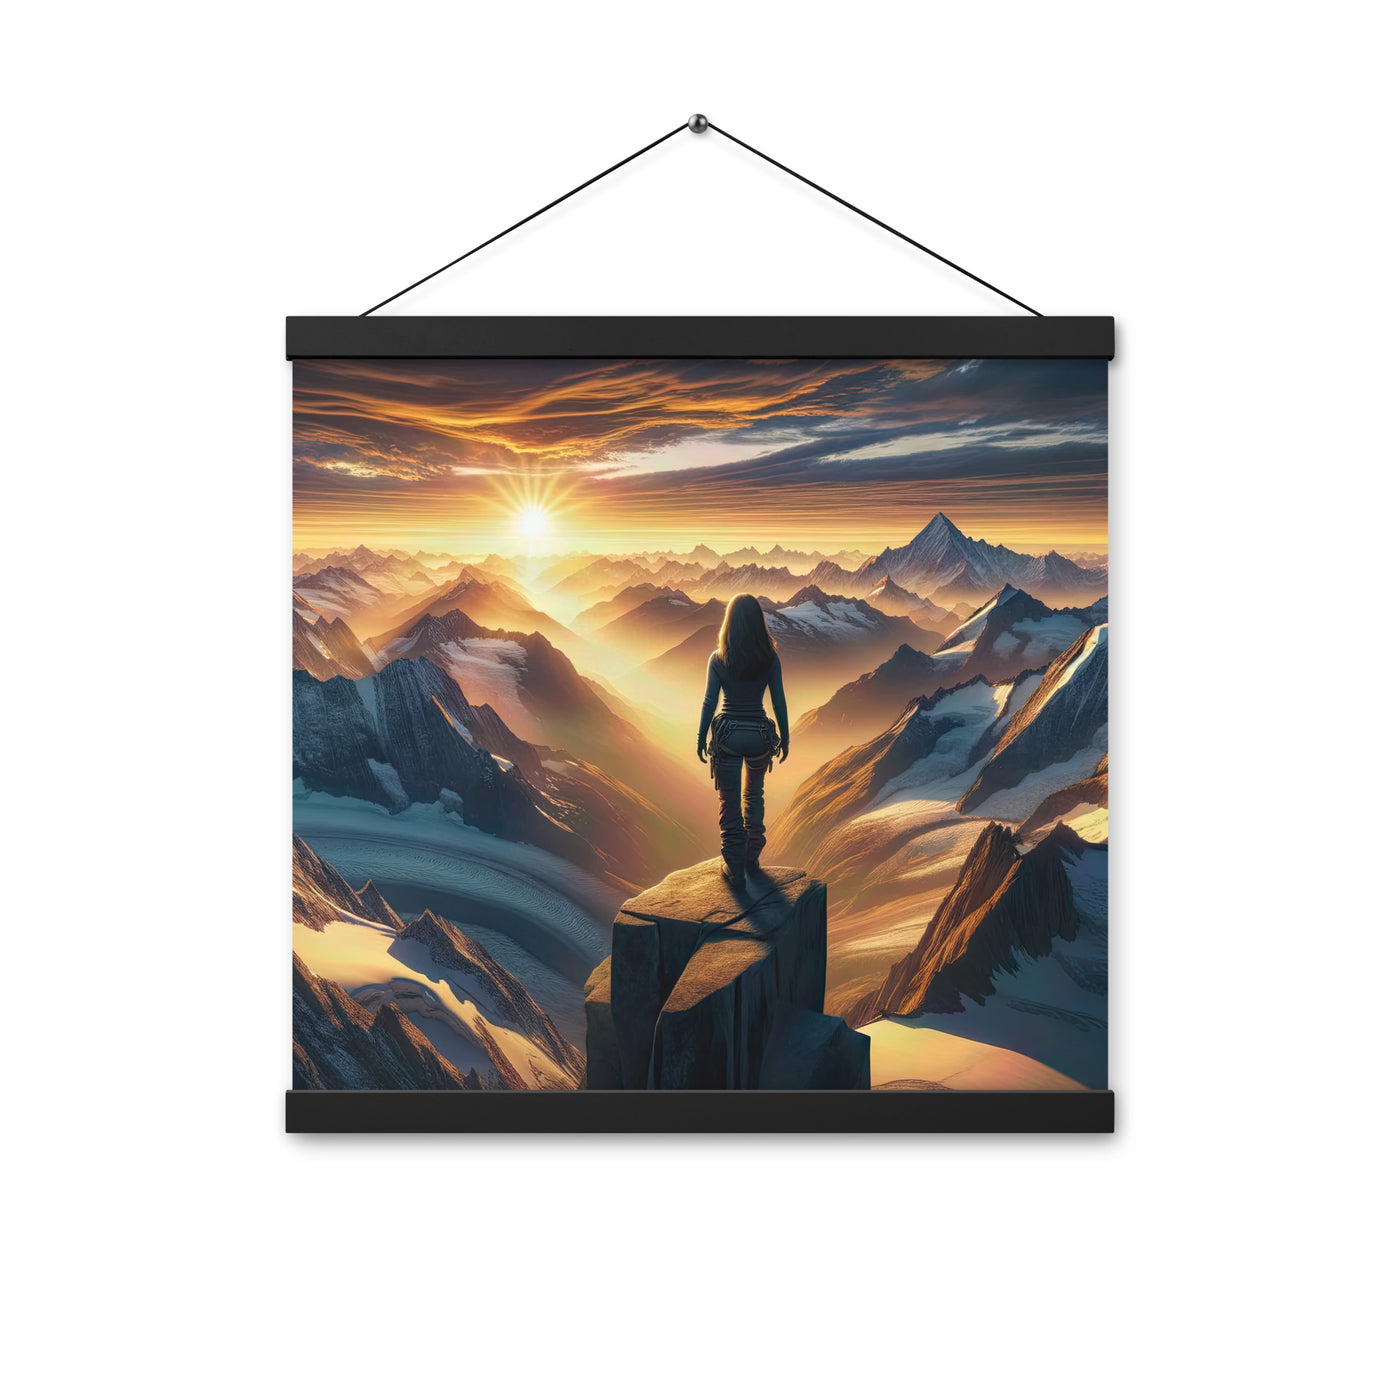 Fotorealistische Darstellung der Alpen bei Sonnenaufgang, Wanderin unter einem gold-purpurnen Himmel - Enhanced Matte Paper Poster With wandern xxx yyy zzz 40.6 x 40.6 cm